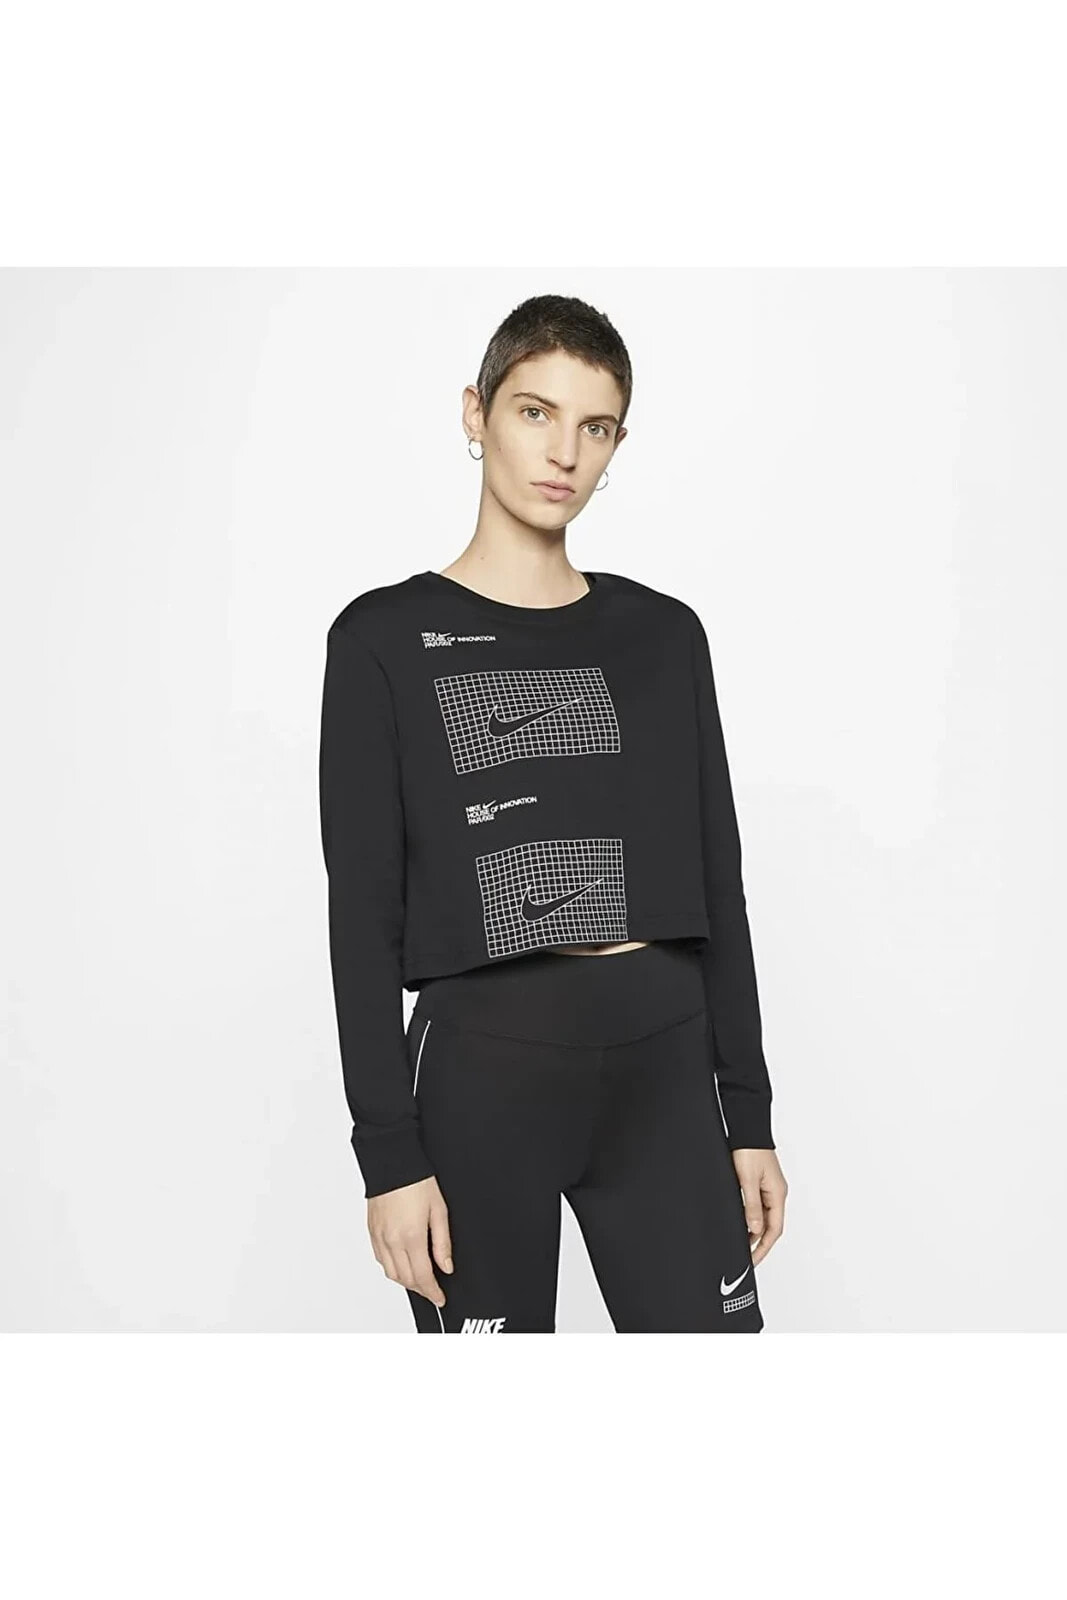 Sportswear House Of Innovation (paris) Women's Long-sleeve Crop T-shirt - Black - Cz4878-010